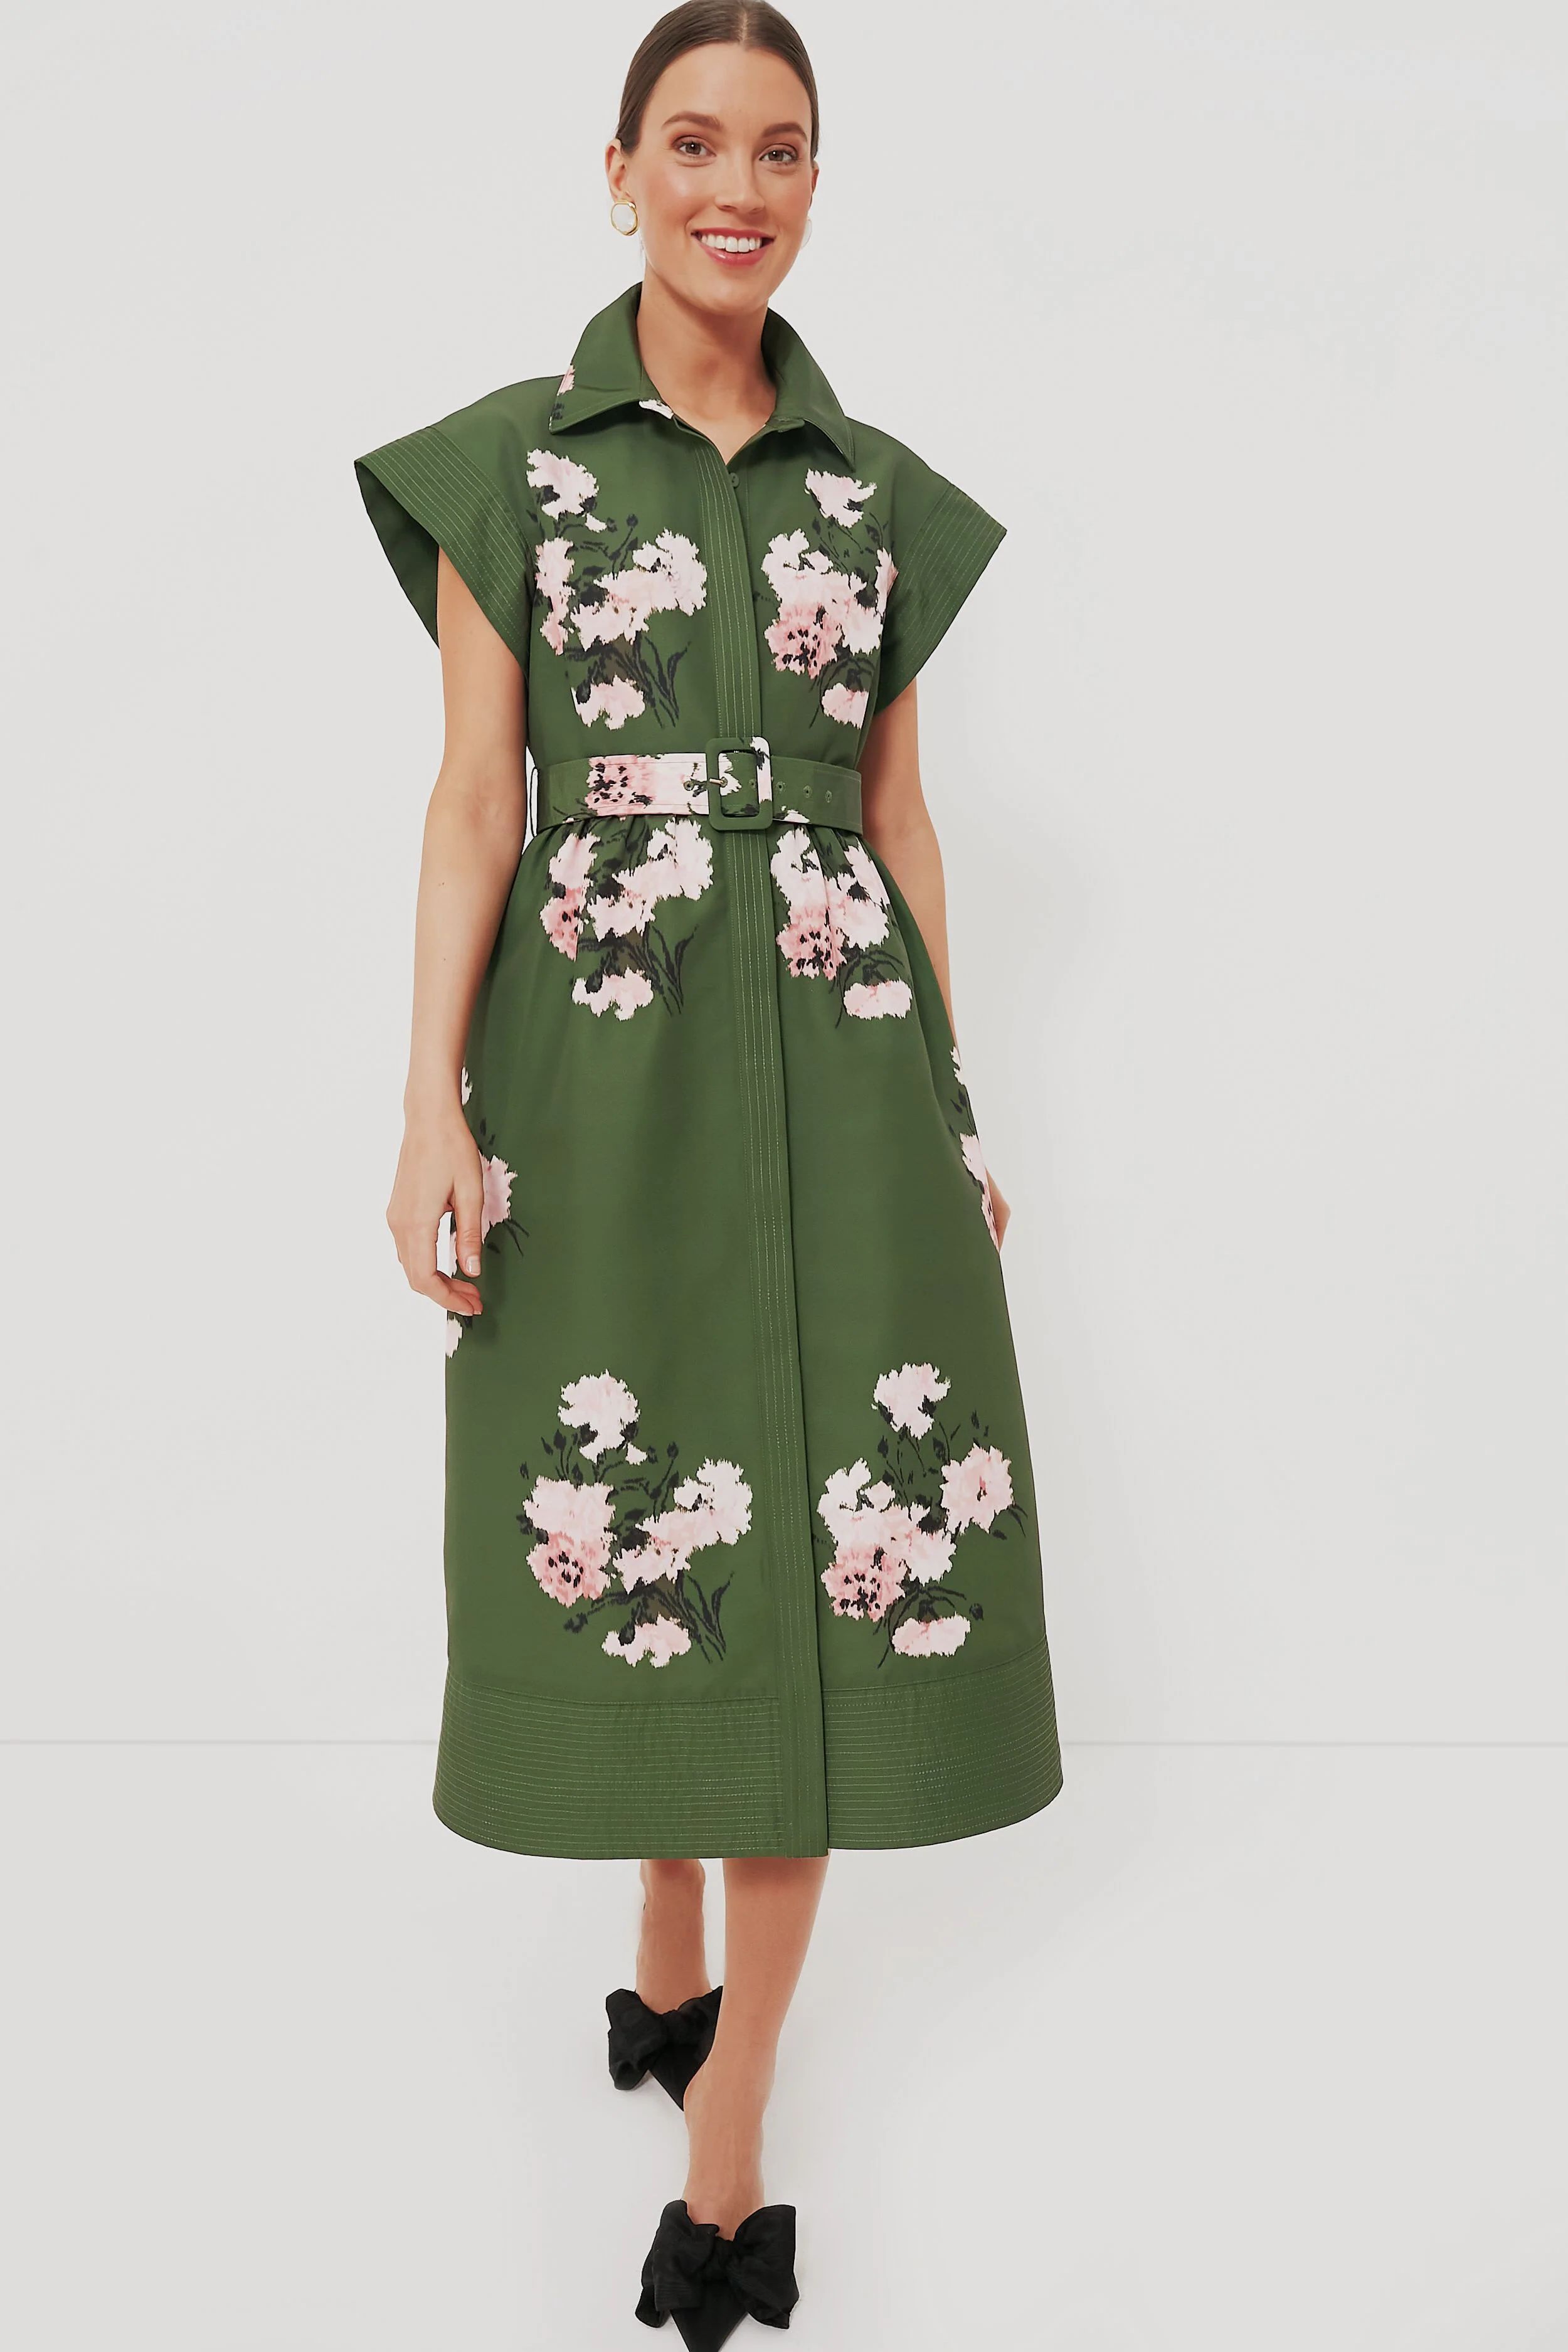 Olive and Pressed Powder Floral Chloe Dress | Tuckernuck (US)